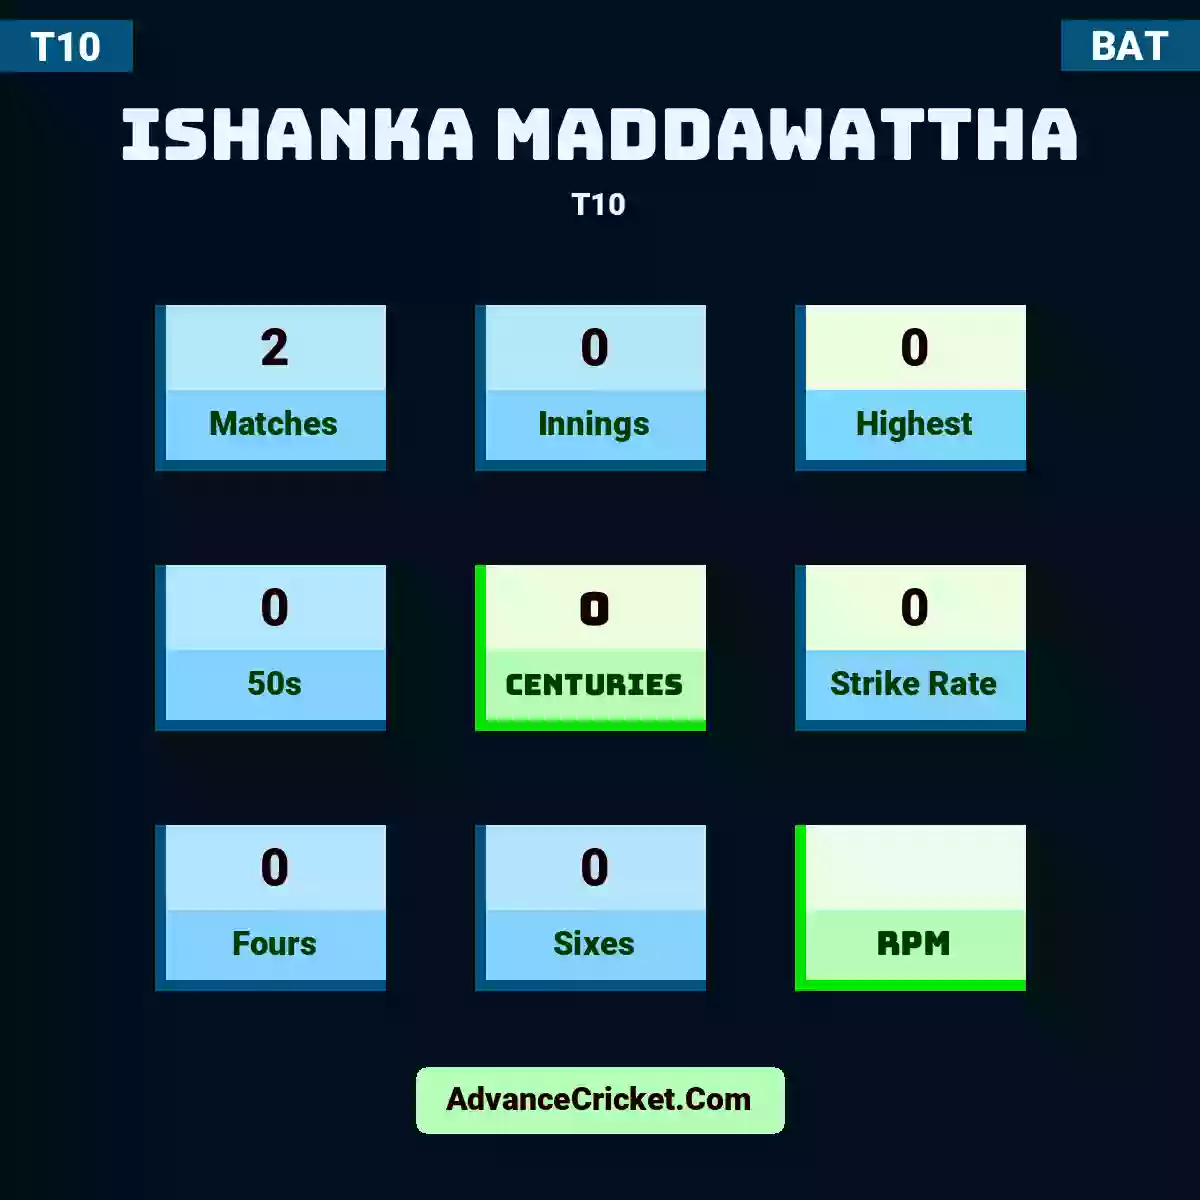 Ishanka Maddawattha T10 , Ishanka Maddawattha played 2 matches, scored 0 runs as highest, 0 half-centuries, and 0 centuries, with a strike rate of 0. I.Maddawattha hit 0 fours and 0 sixes.